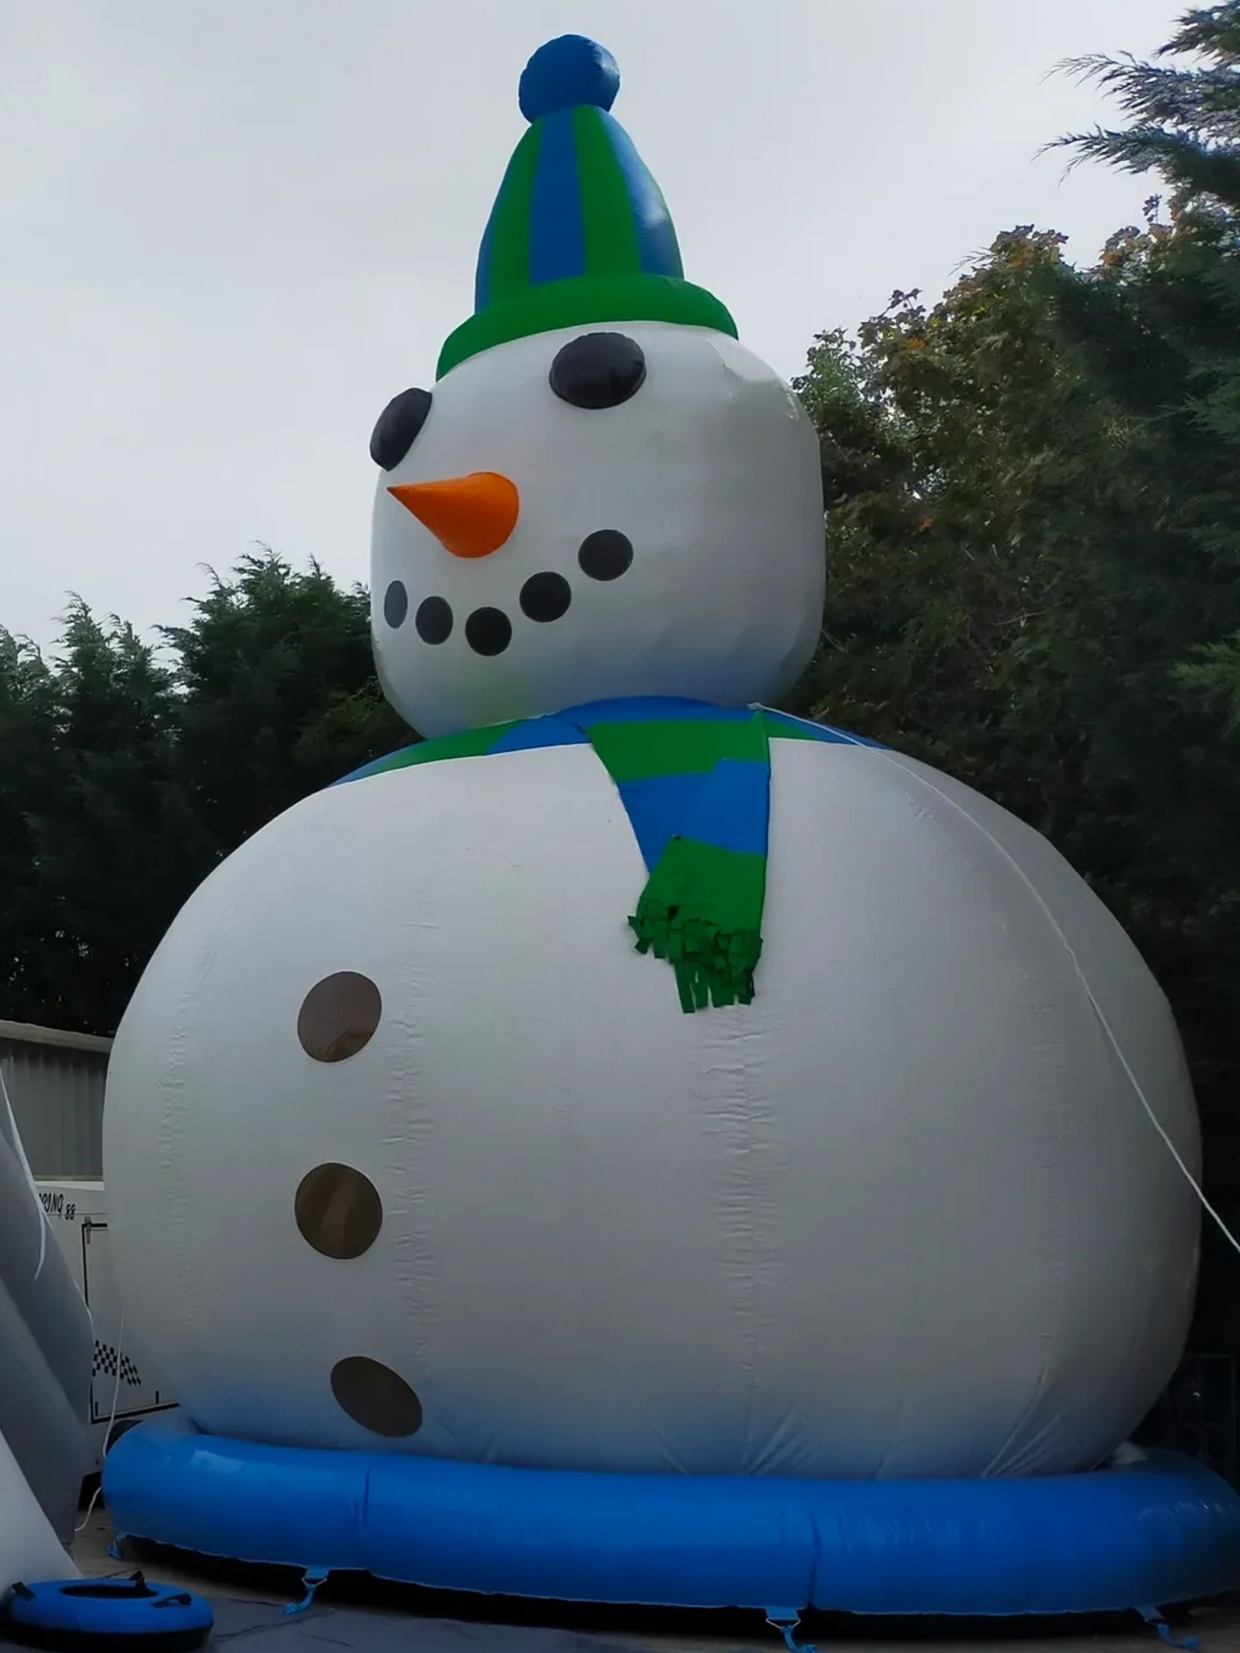 Snowman bouncy castle,
Snow man inflatable